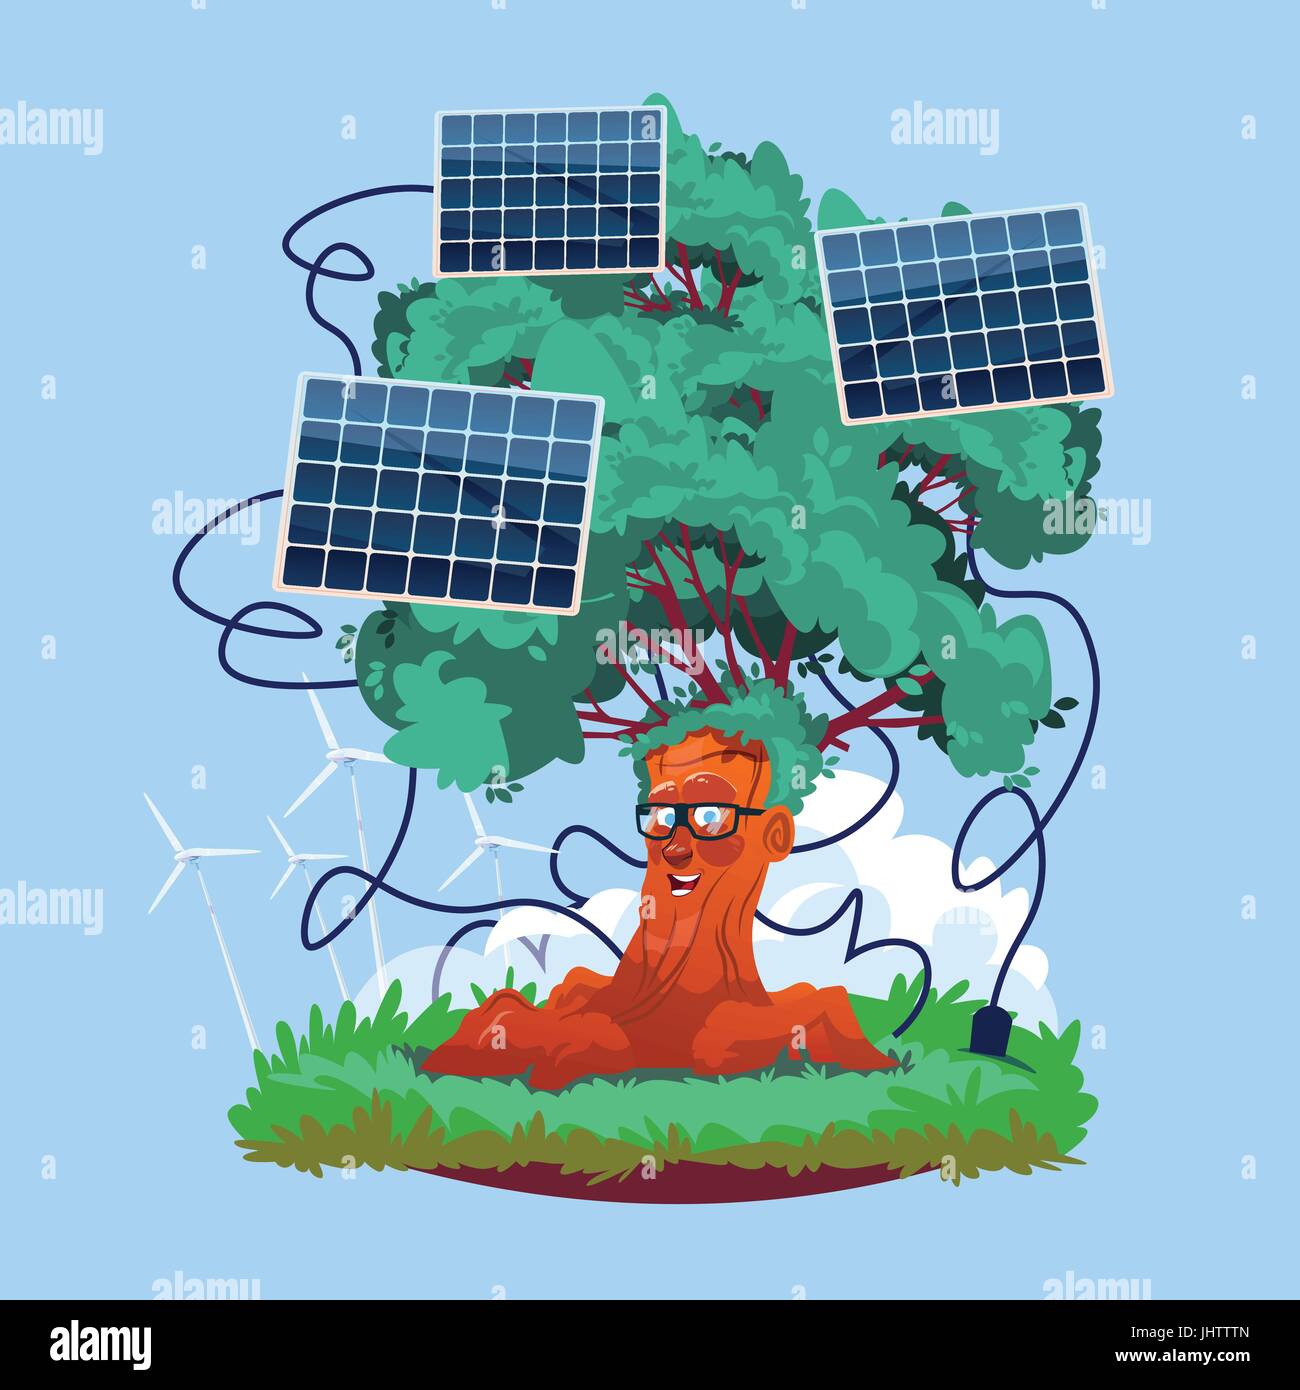 solar energy animated images